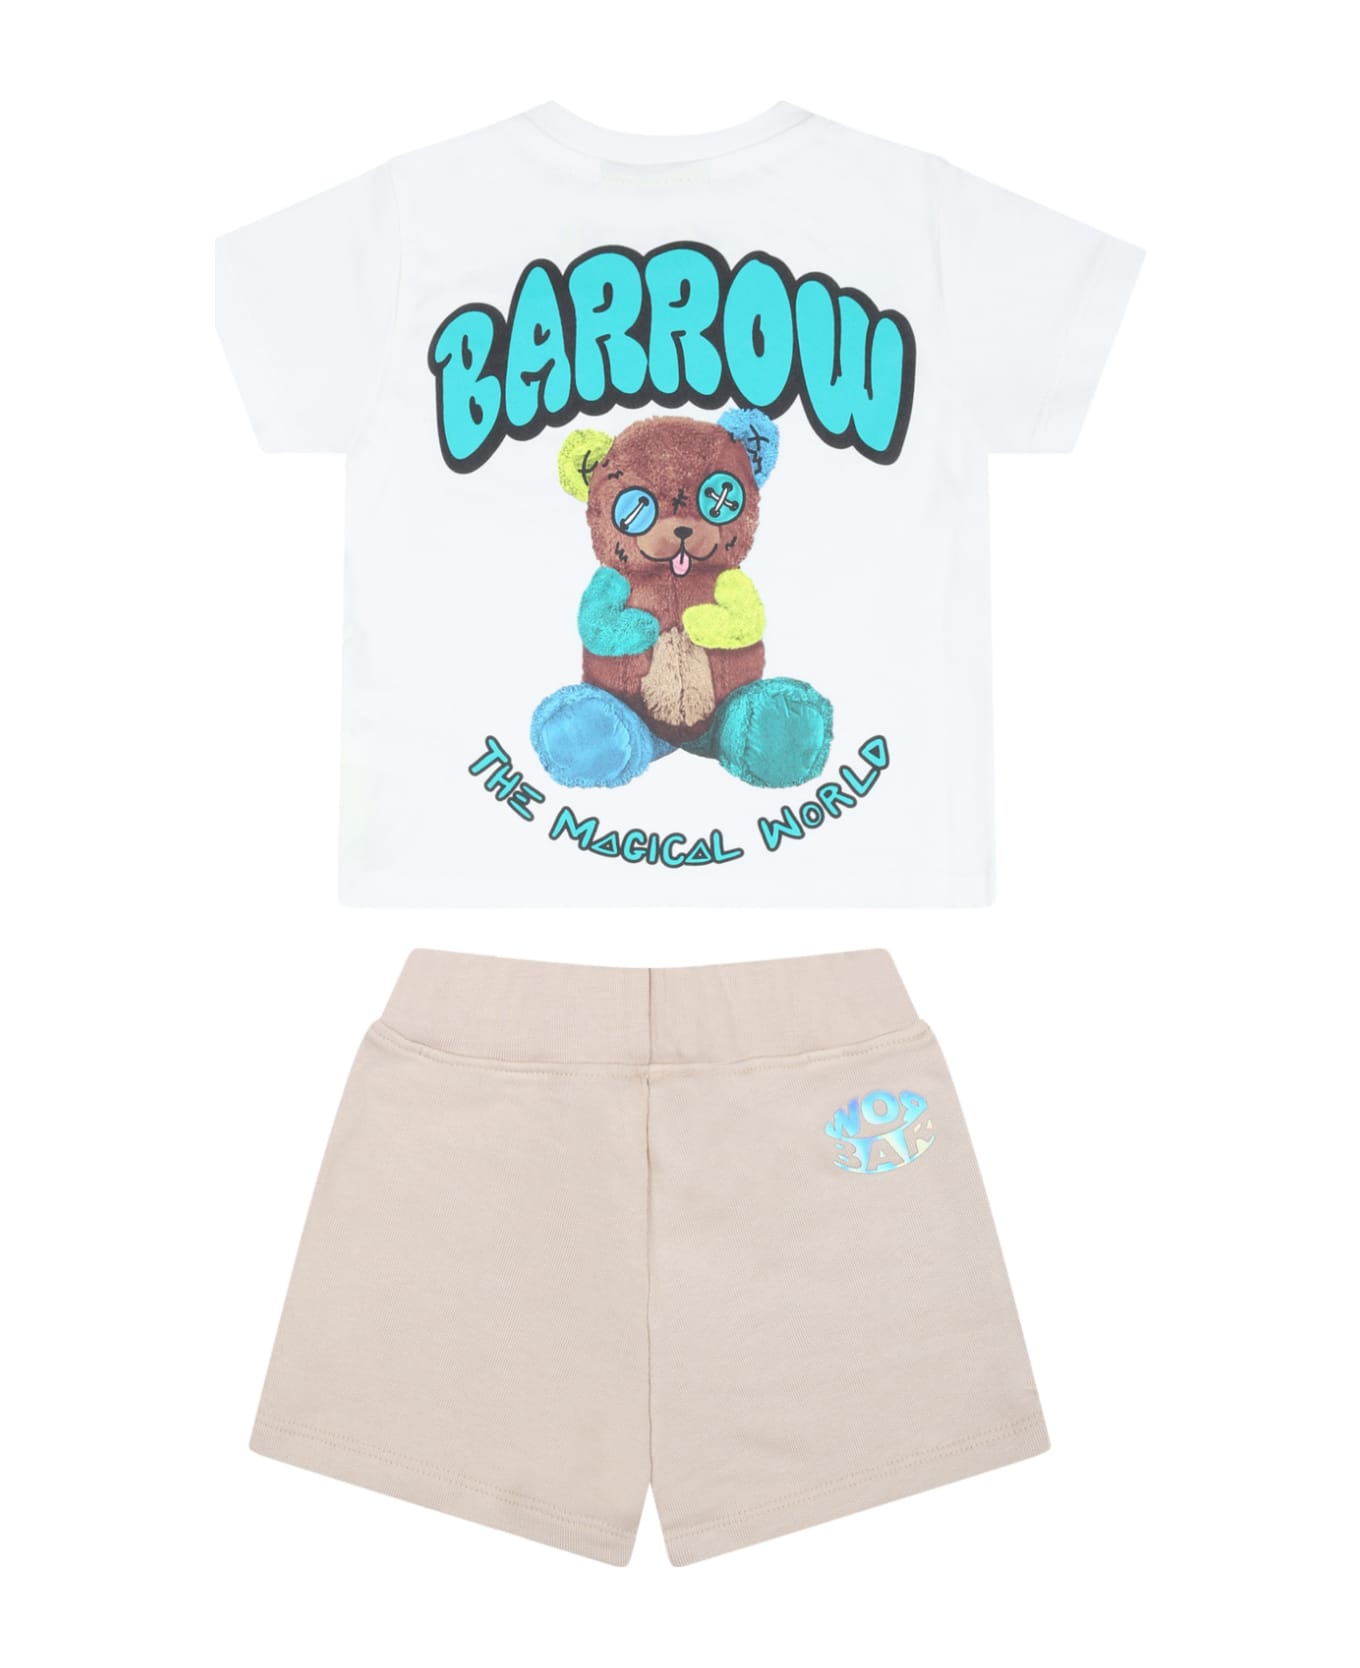 Barrow Multicolor Tracksuit For Baby Boy With Smiley - Multicolor